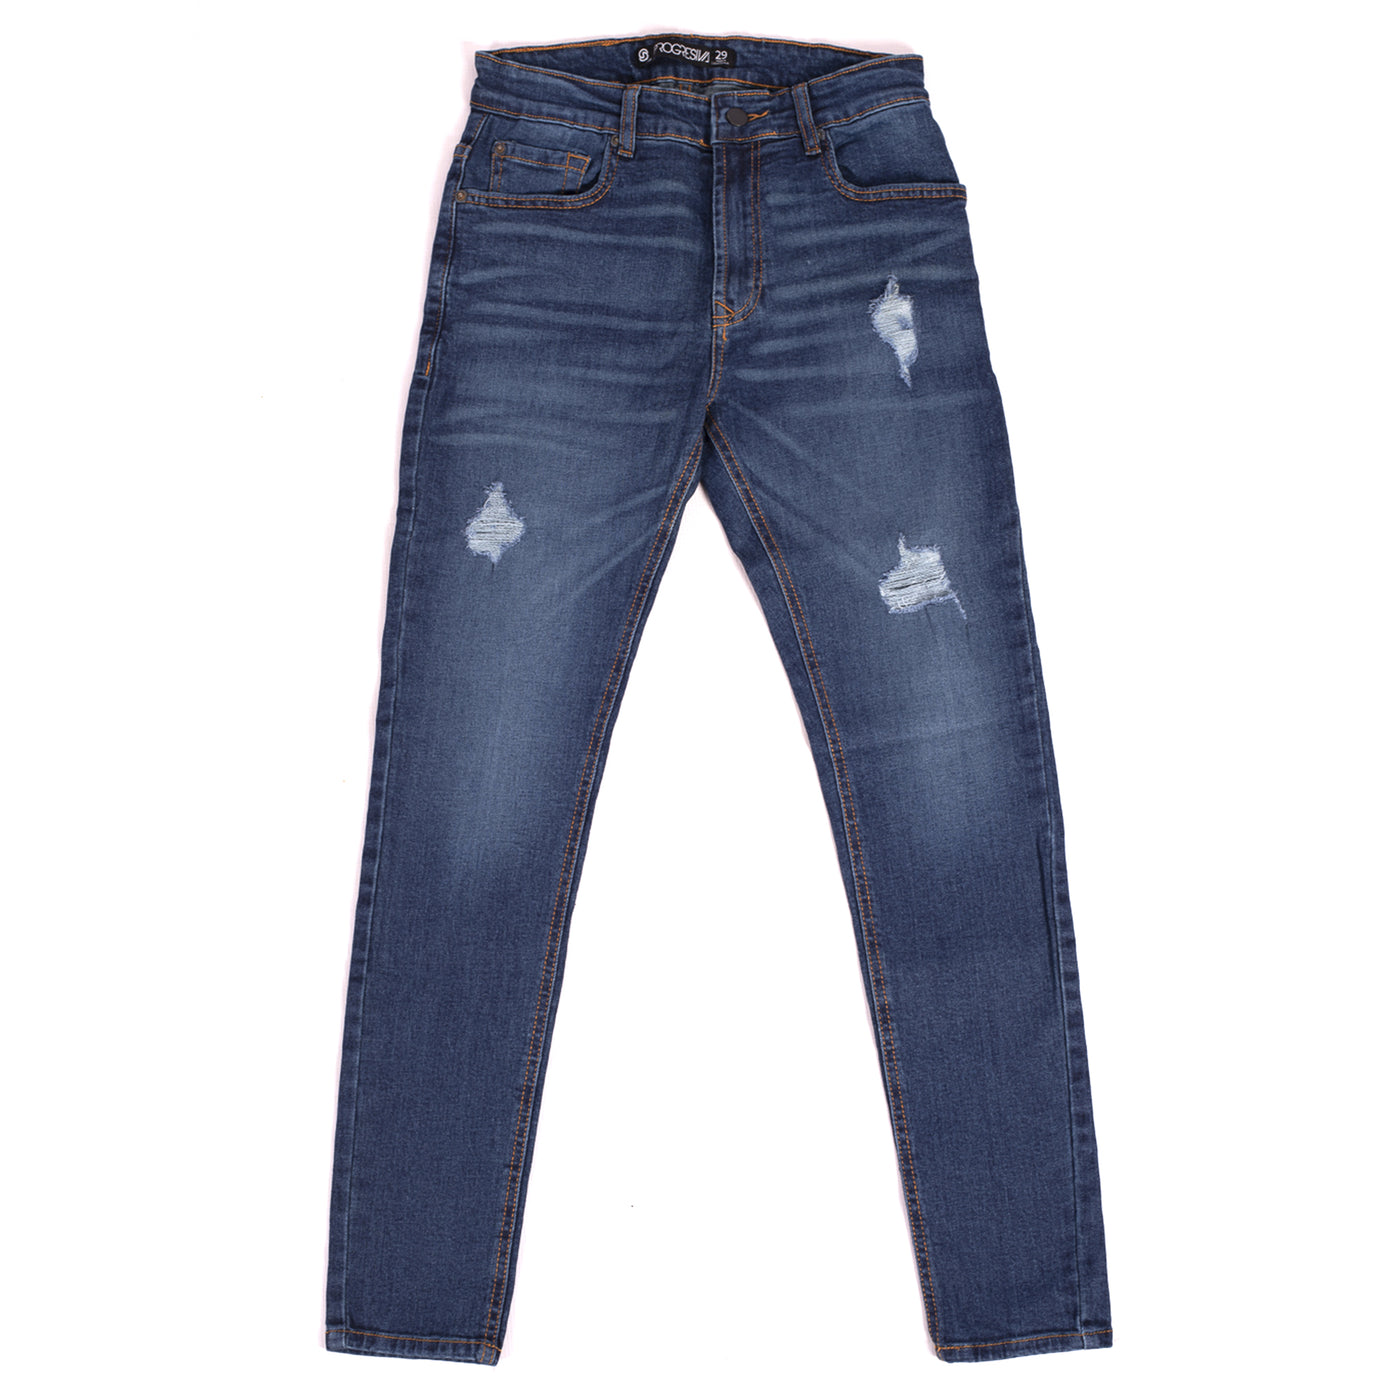 Jeans super denim - LISBOA - skinny roto